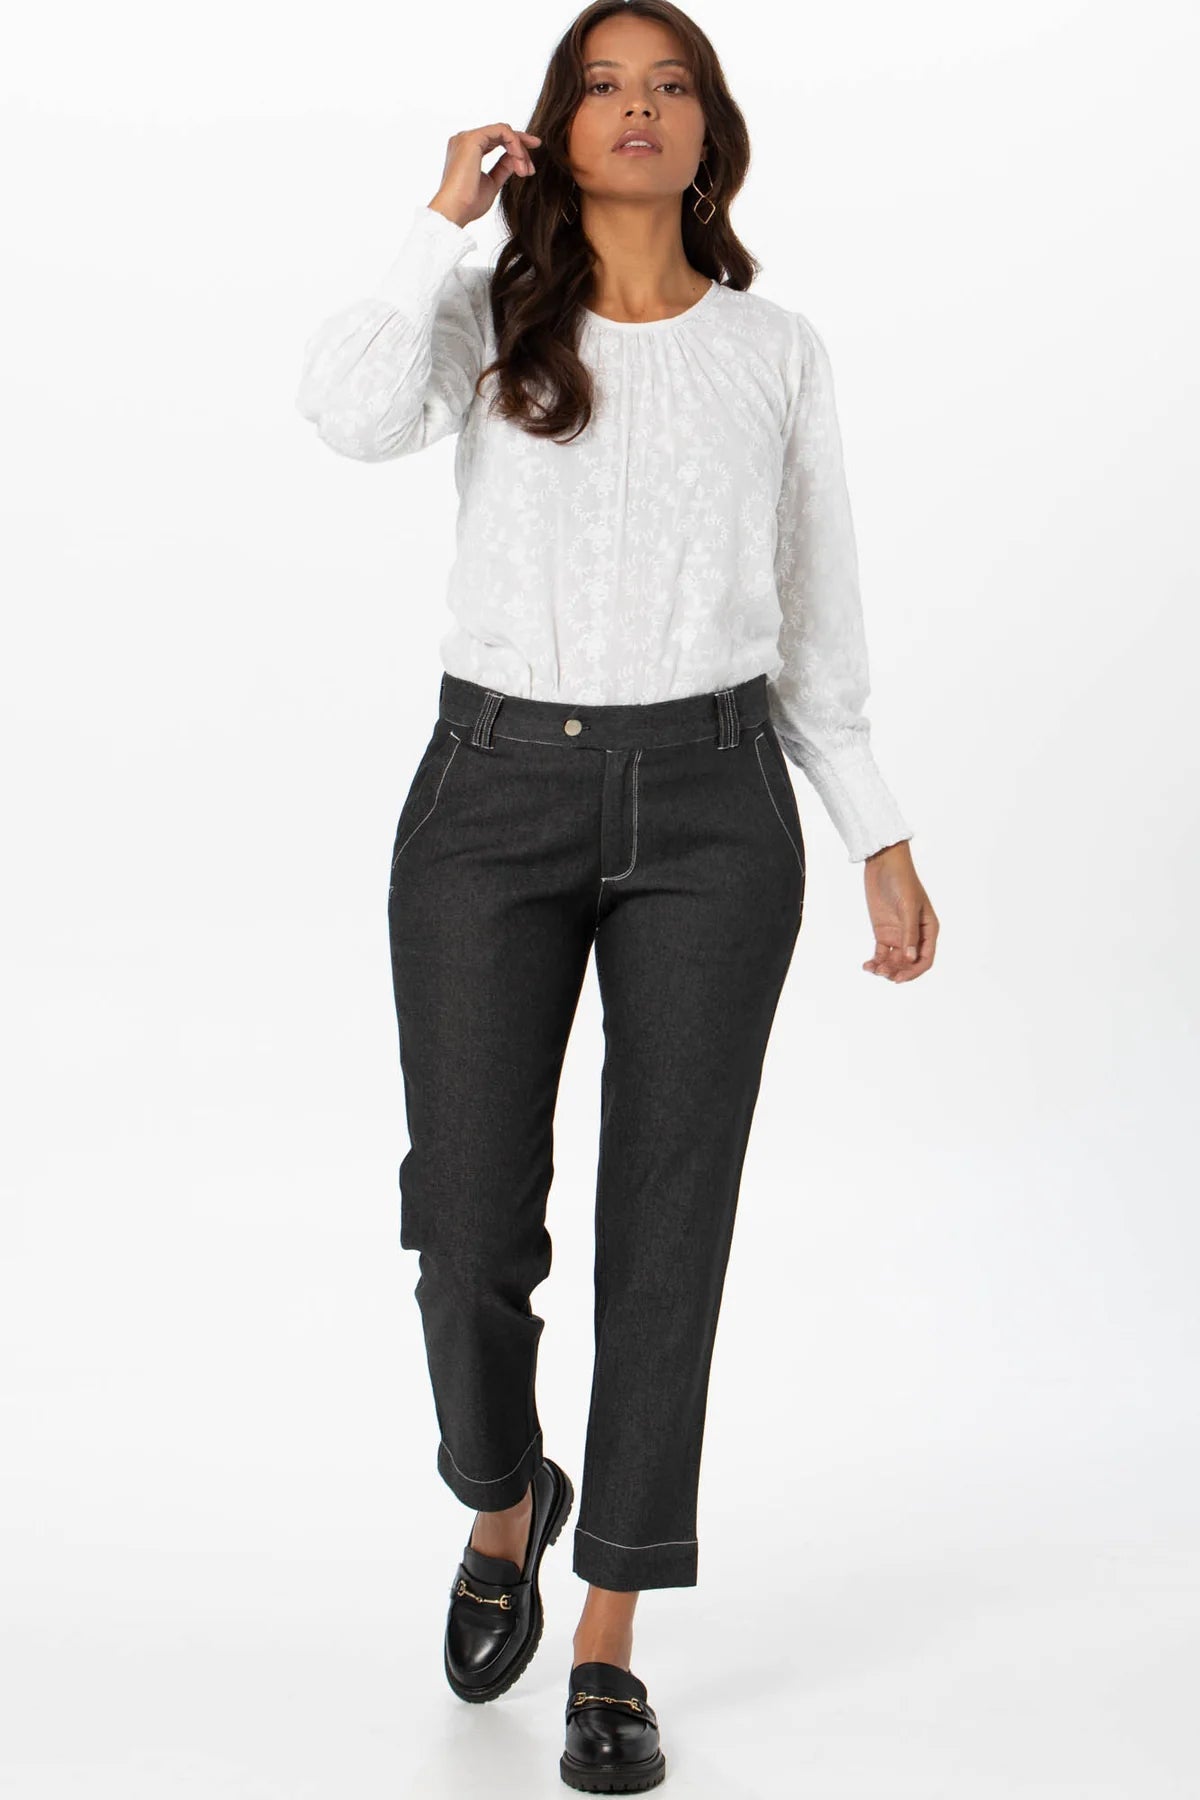 Windsor Jeans Graphite - Ella & Sunday jeans ella & sunday 